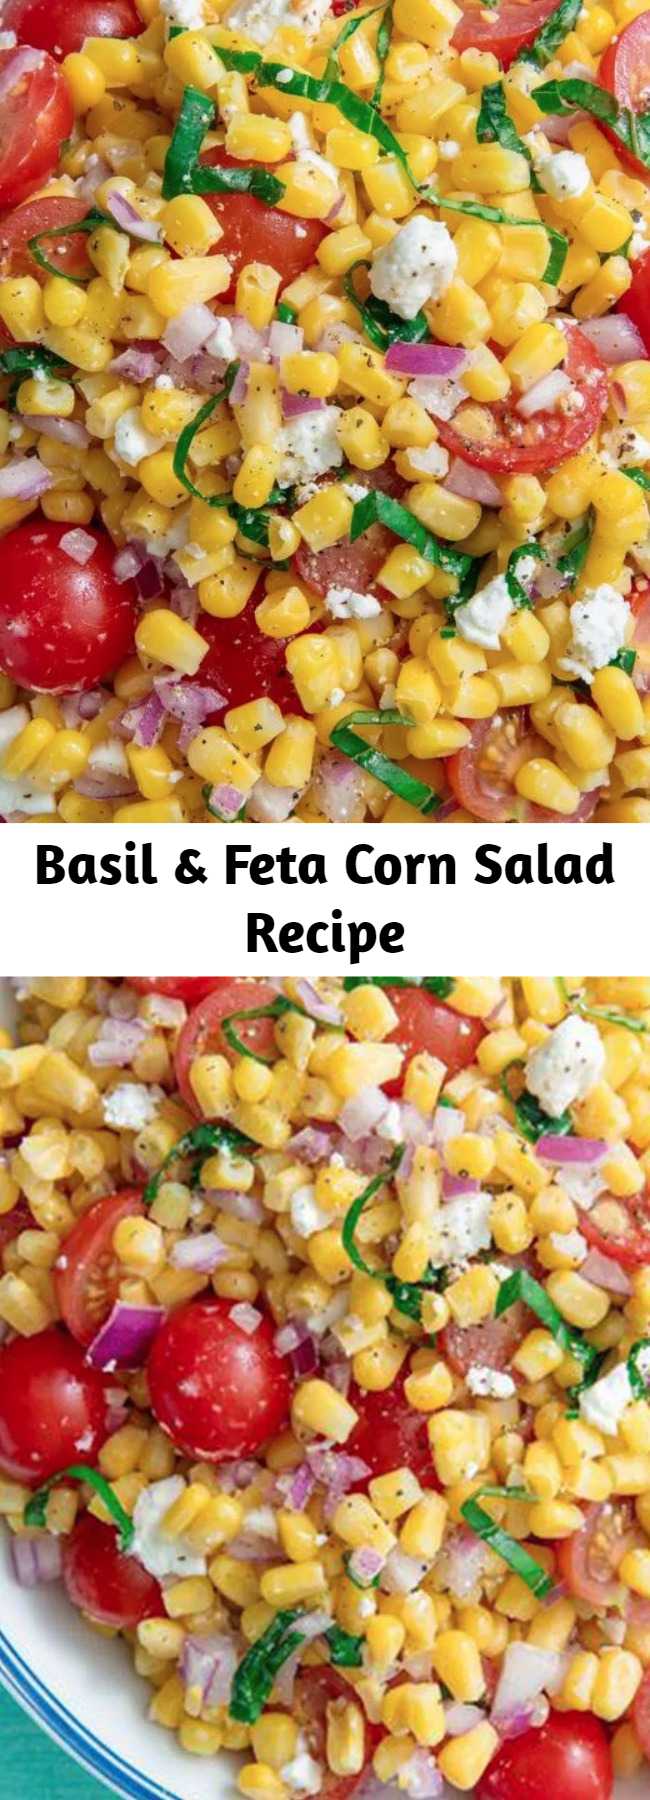 Basil & Feta Corn Salad Recipe - Corn Salad makes the perfect summer dish for picnics, potlucks, or BBQs. So easy to make with no cooking involved! #easyrecipe #corn #summer #sidedish #salad